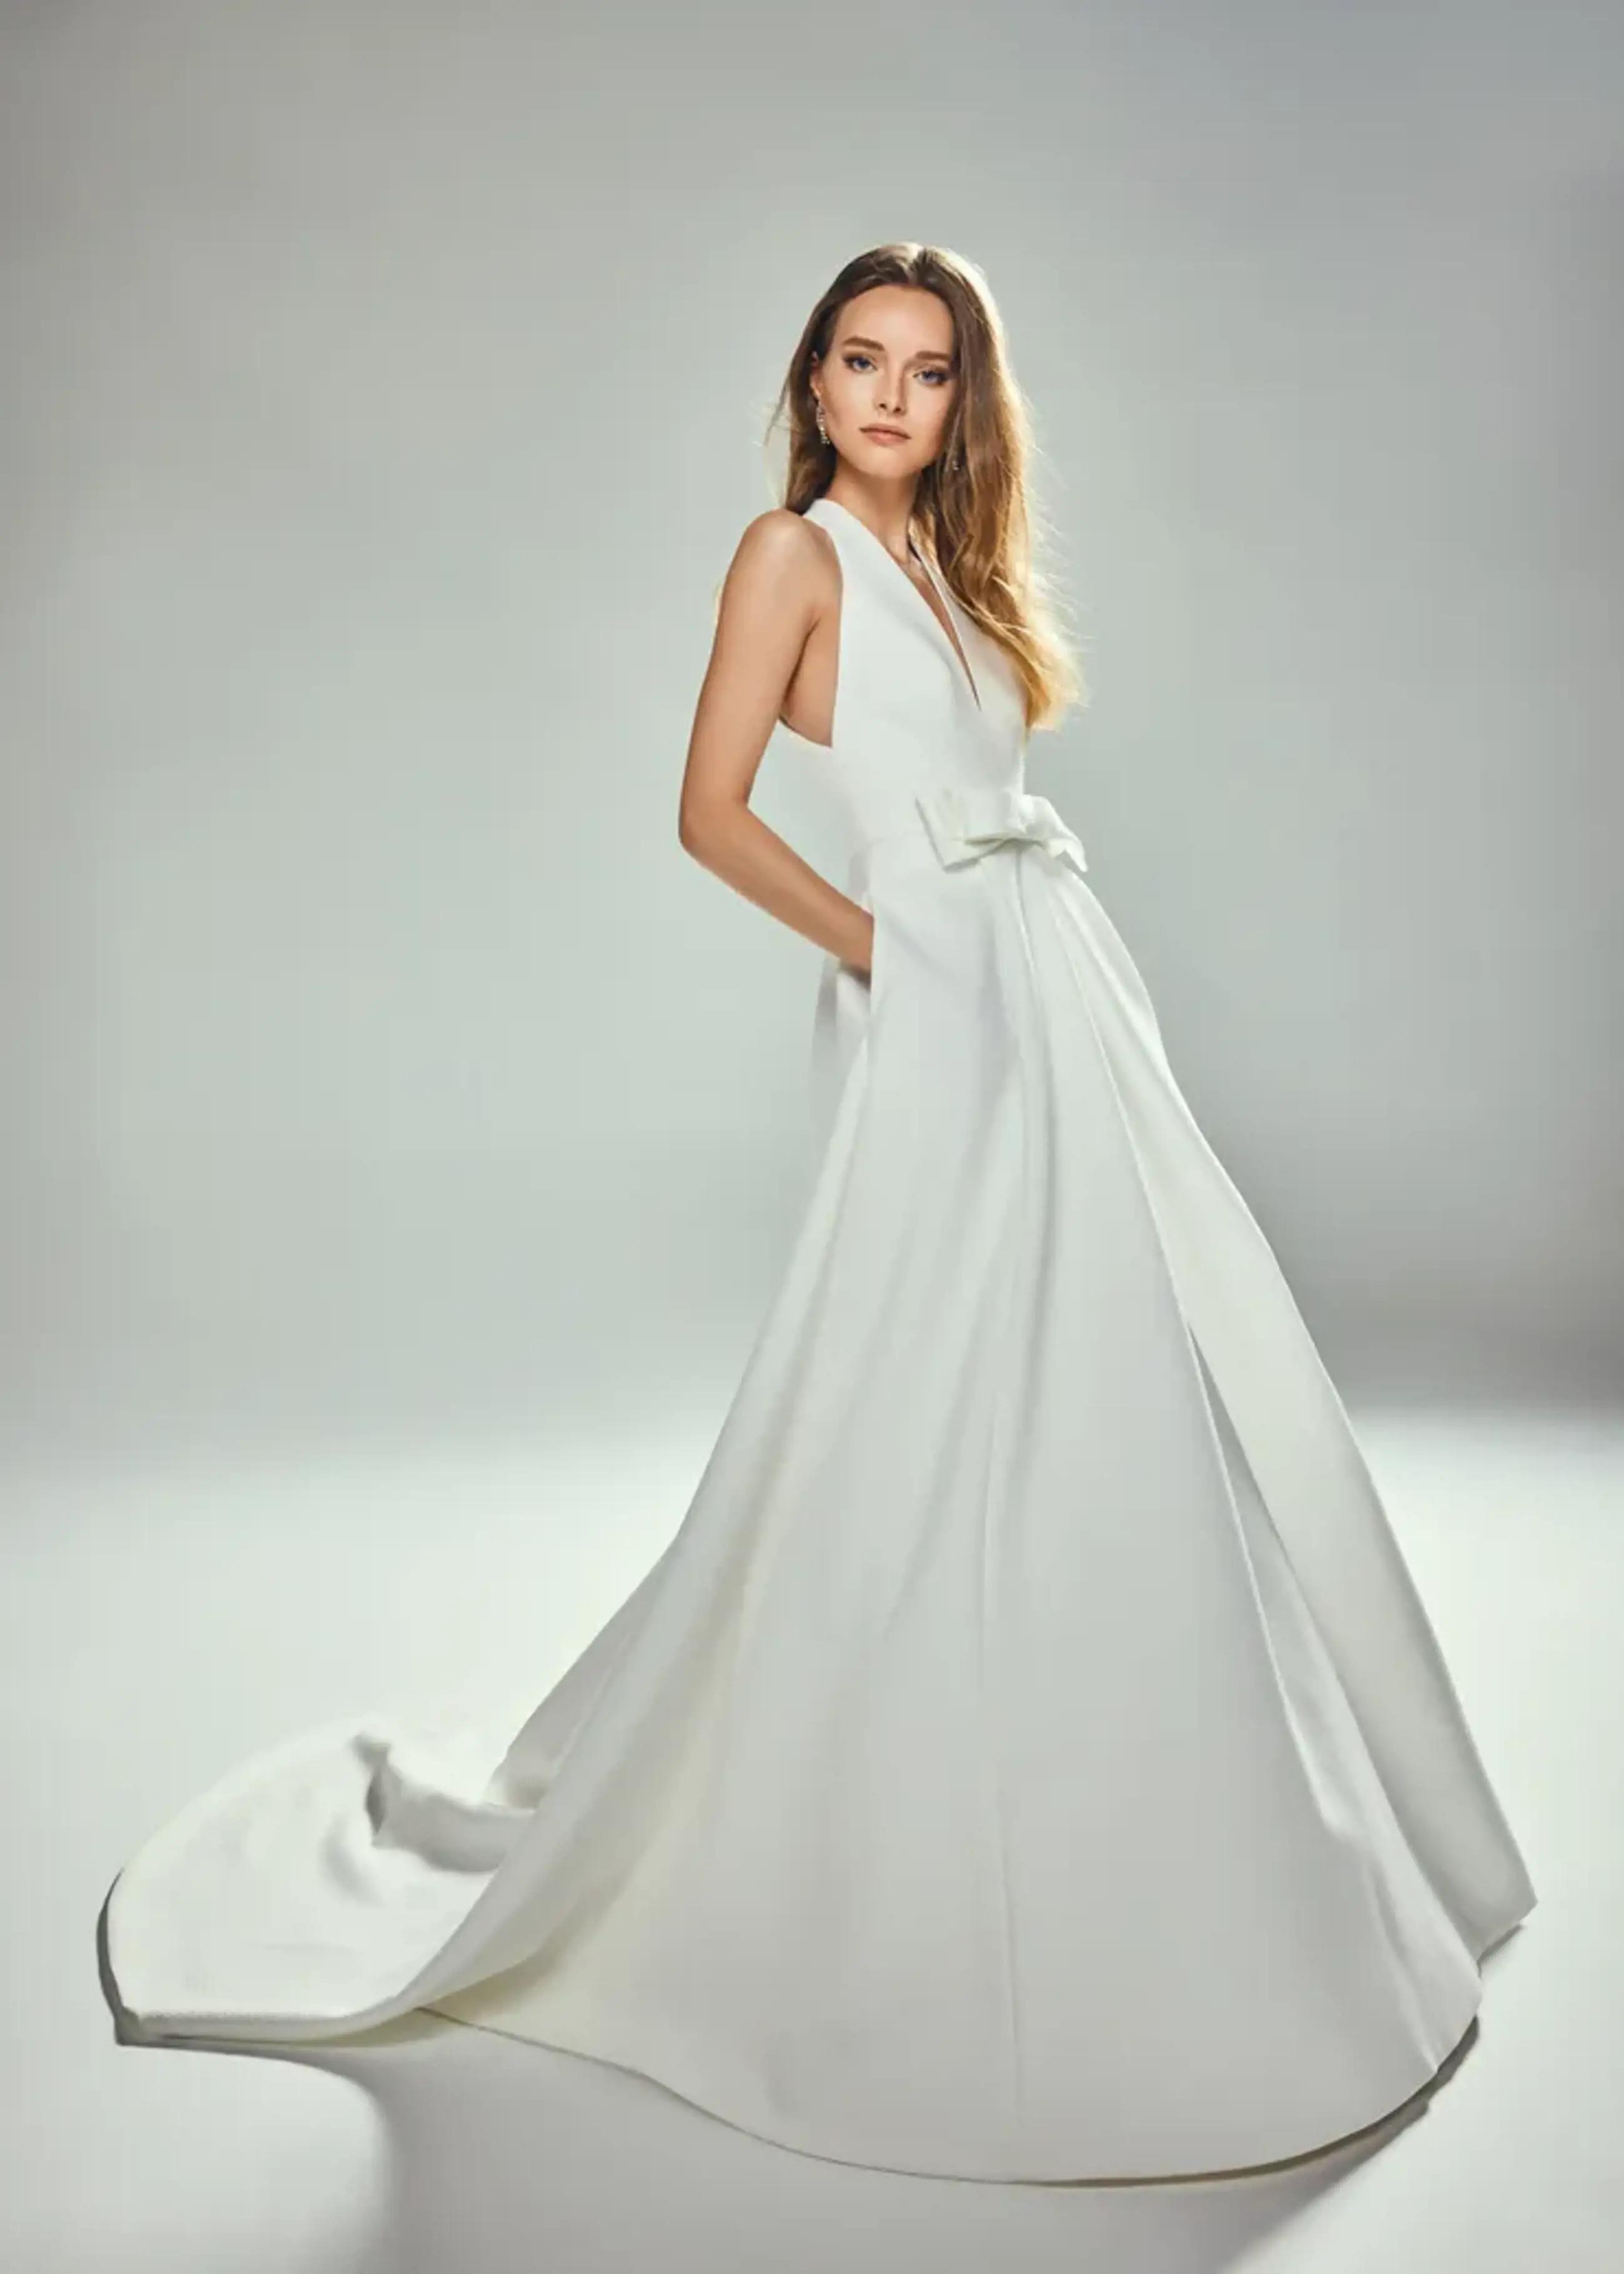 Model wearing Jesus Peiro wedding Dress